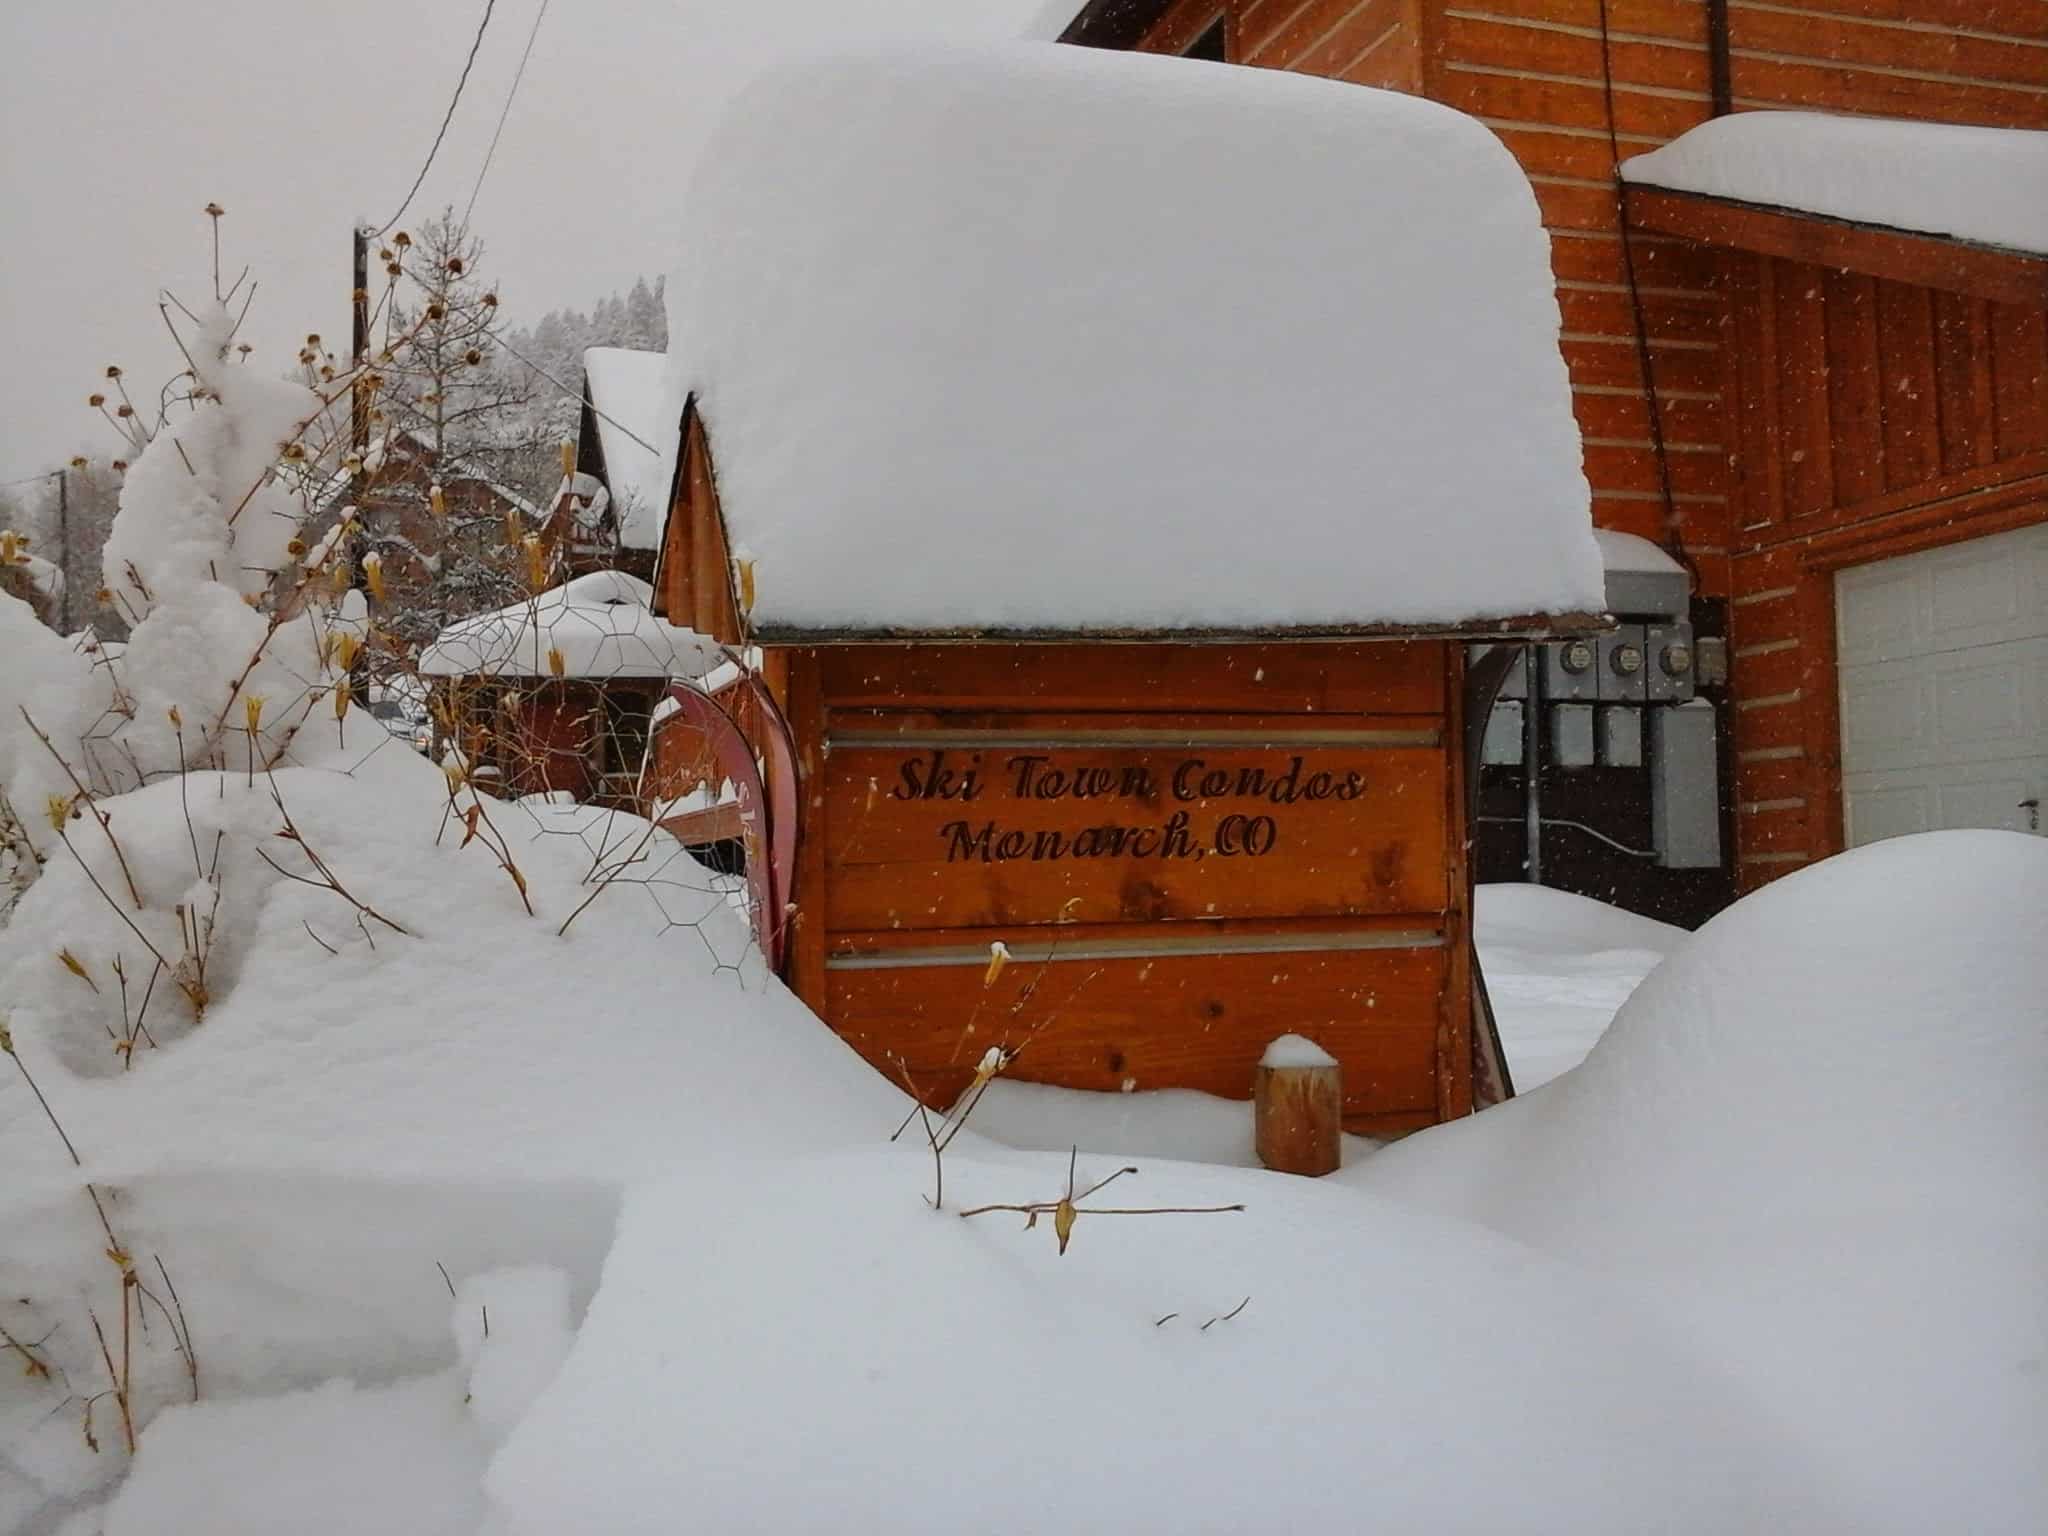 Snow piled high around Ski Town Condos sign.